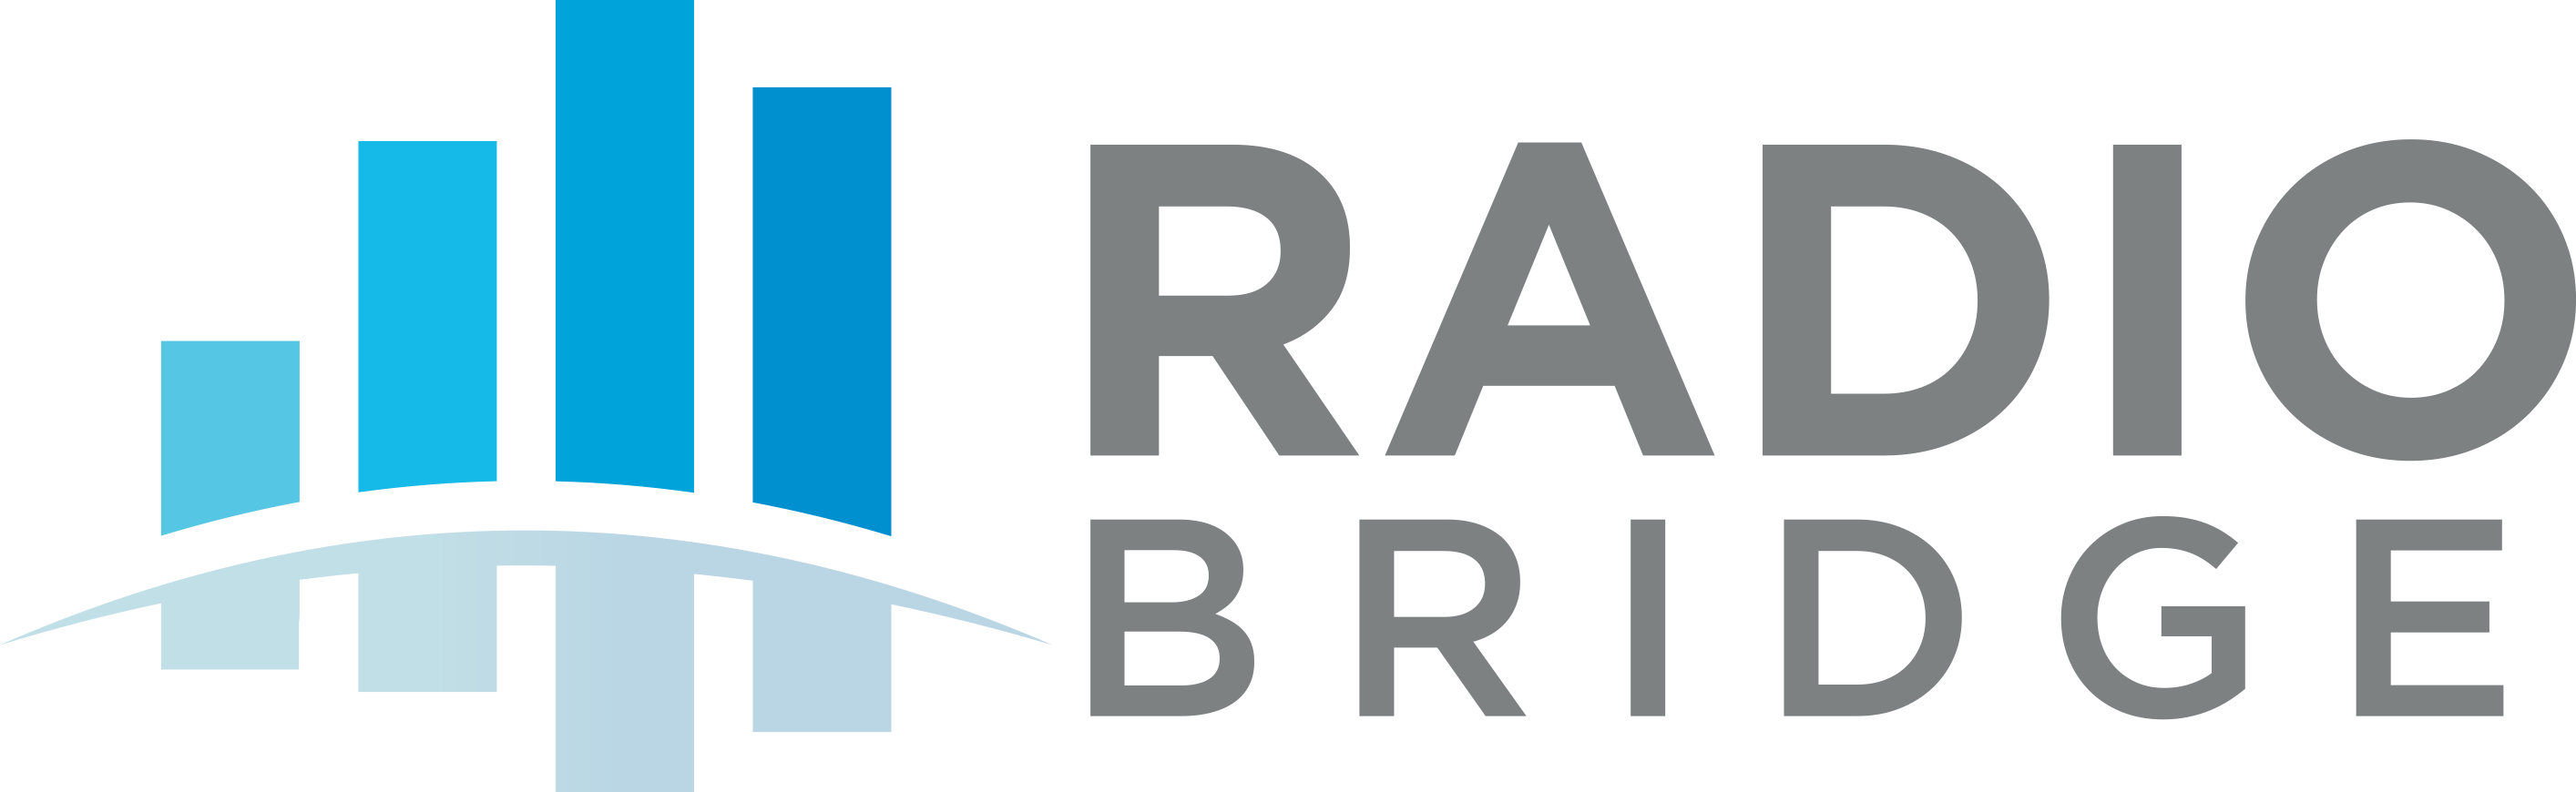 Radio Bridge Inc.